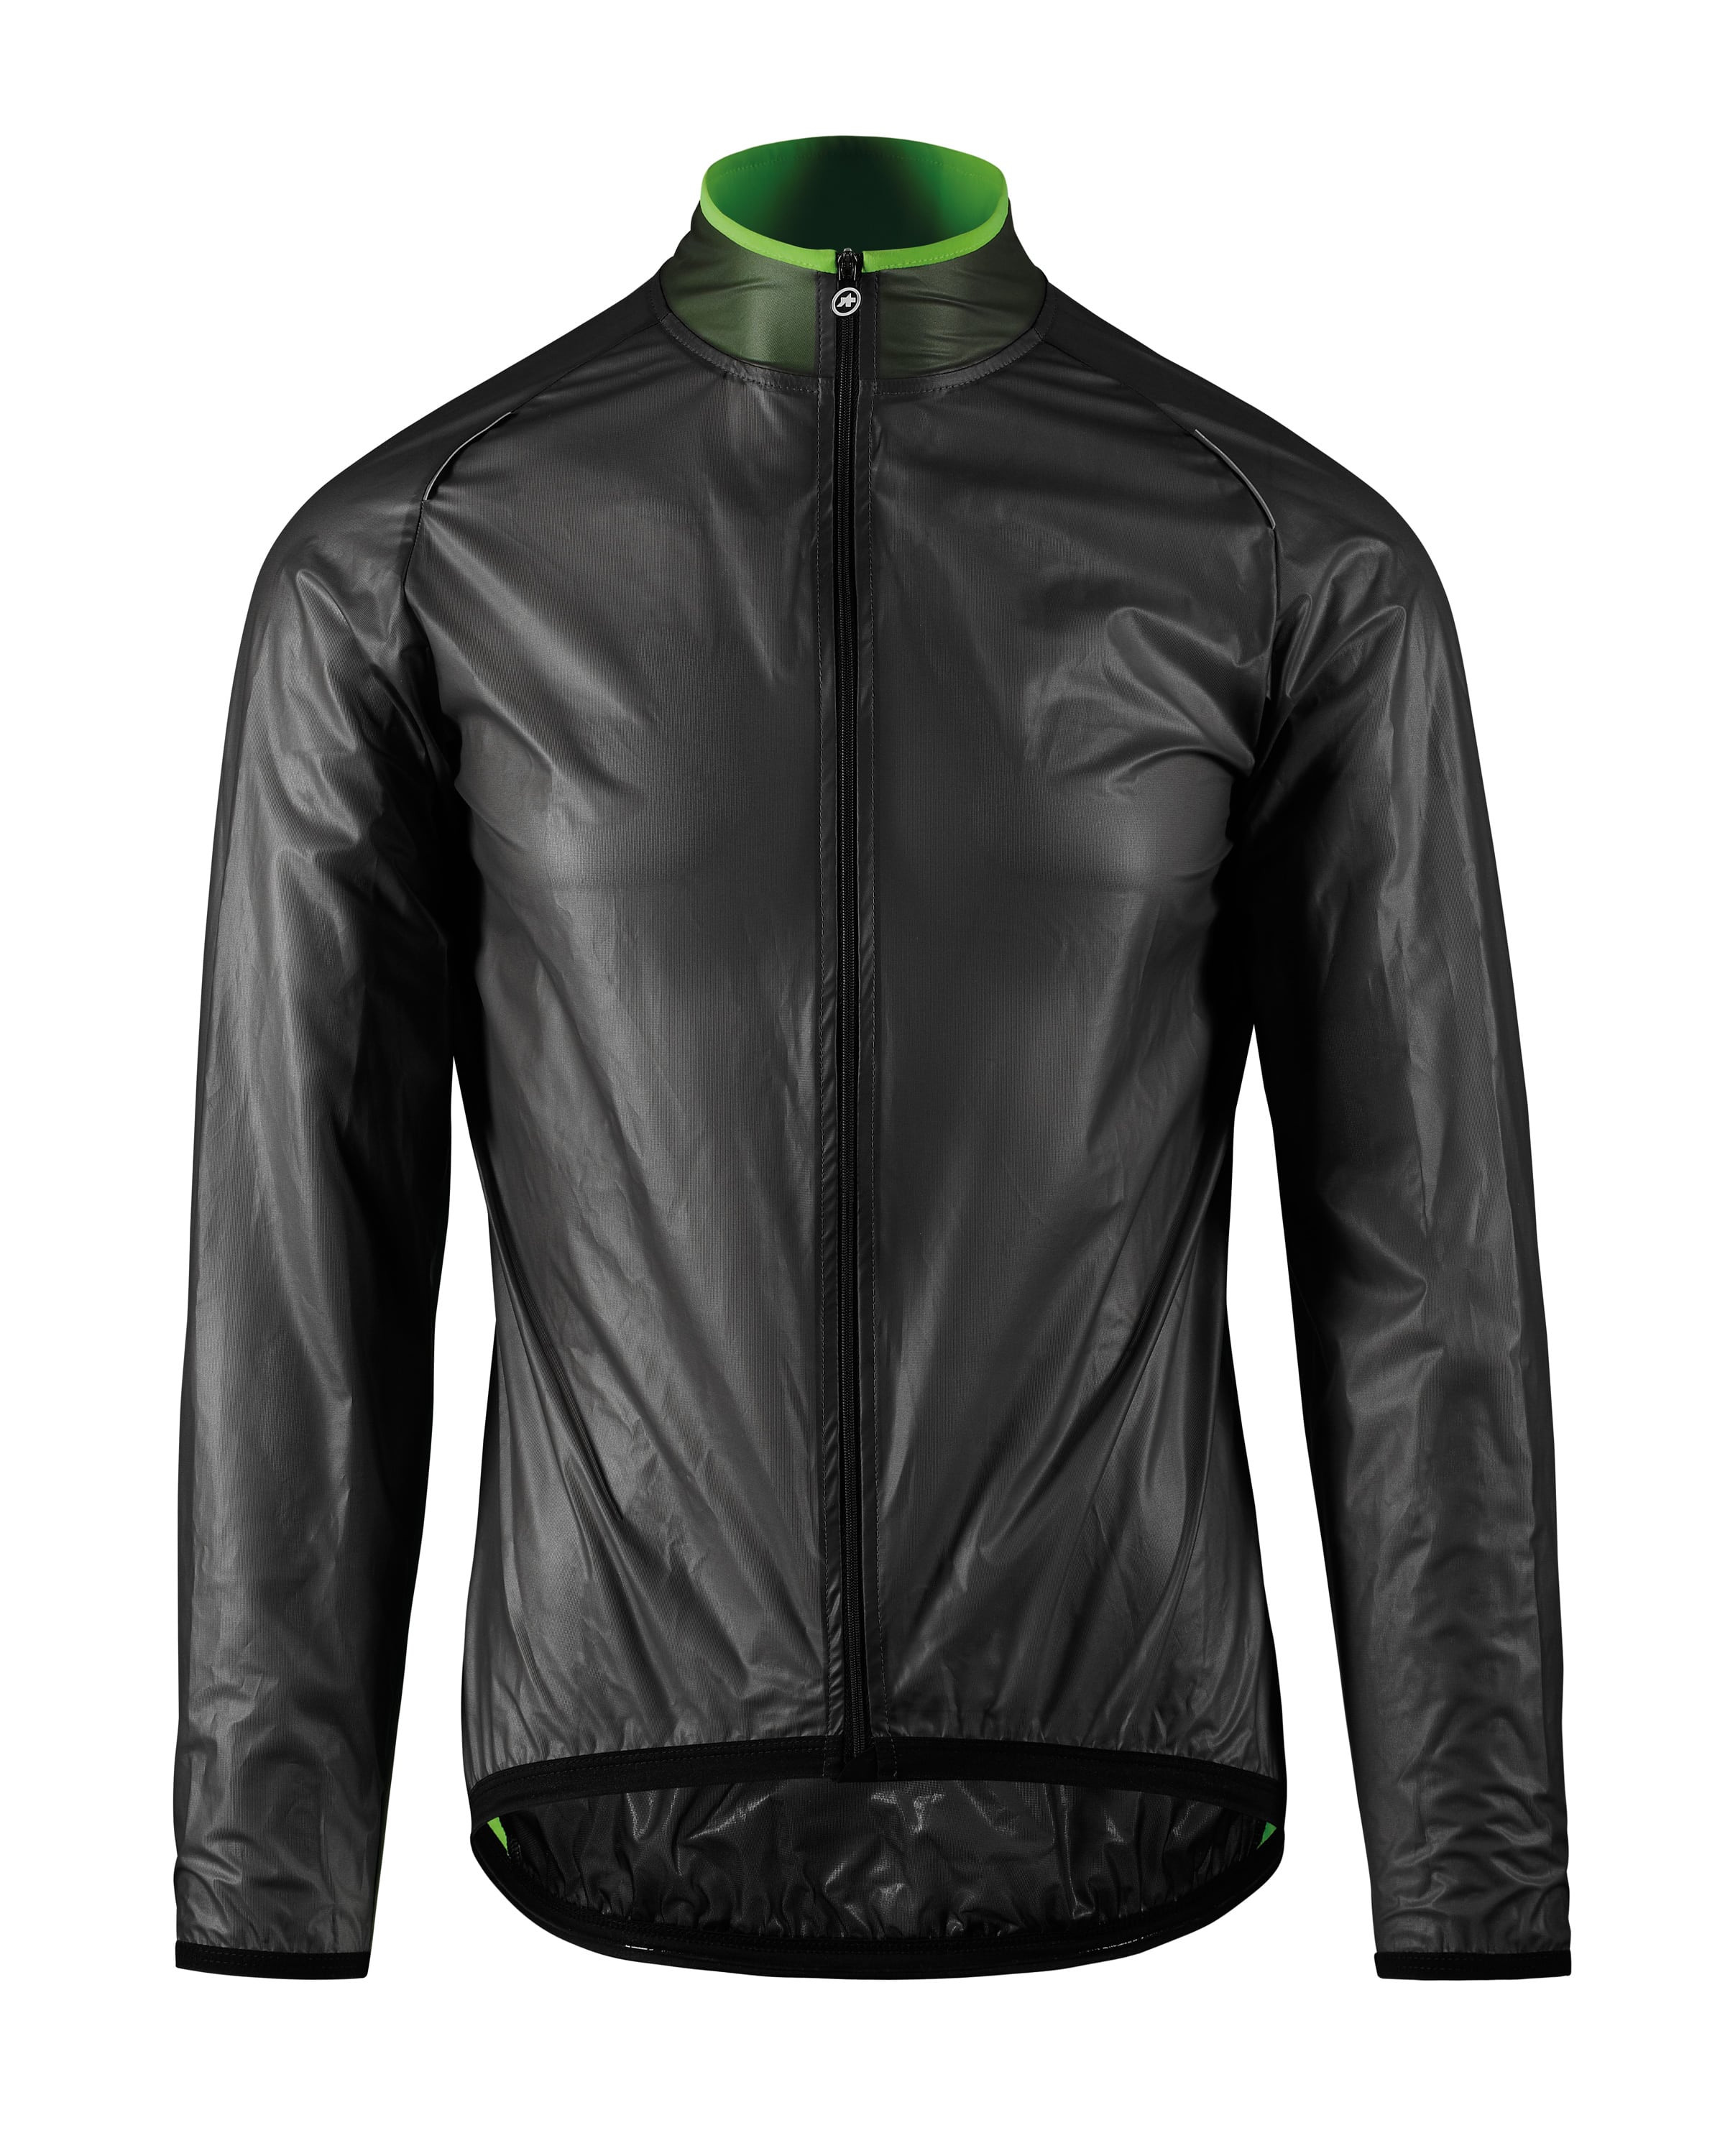 ASSOS Mille GT Clima Jacket blackSeries-X-Large